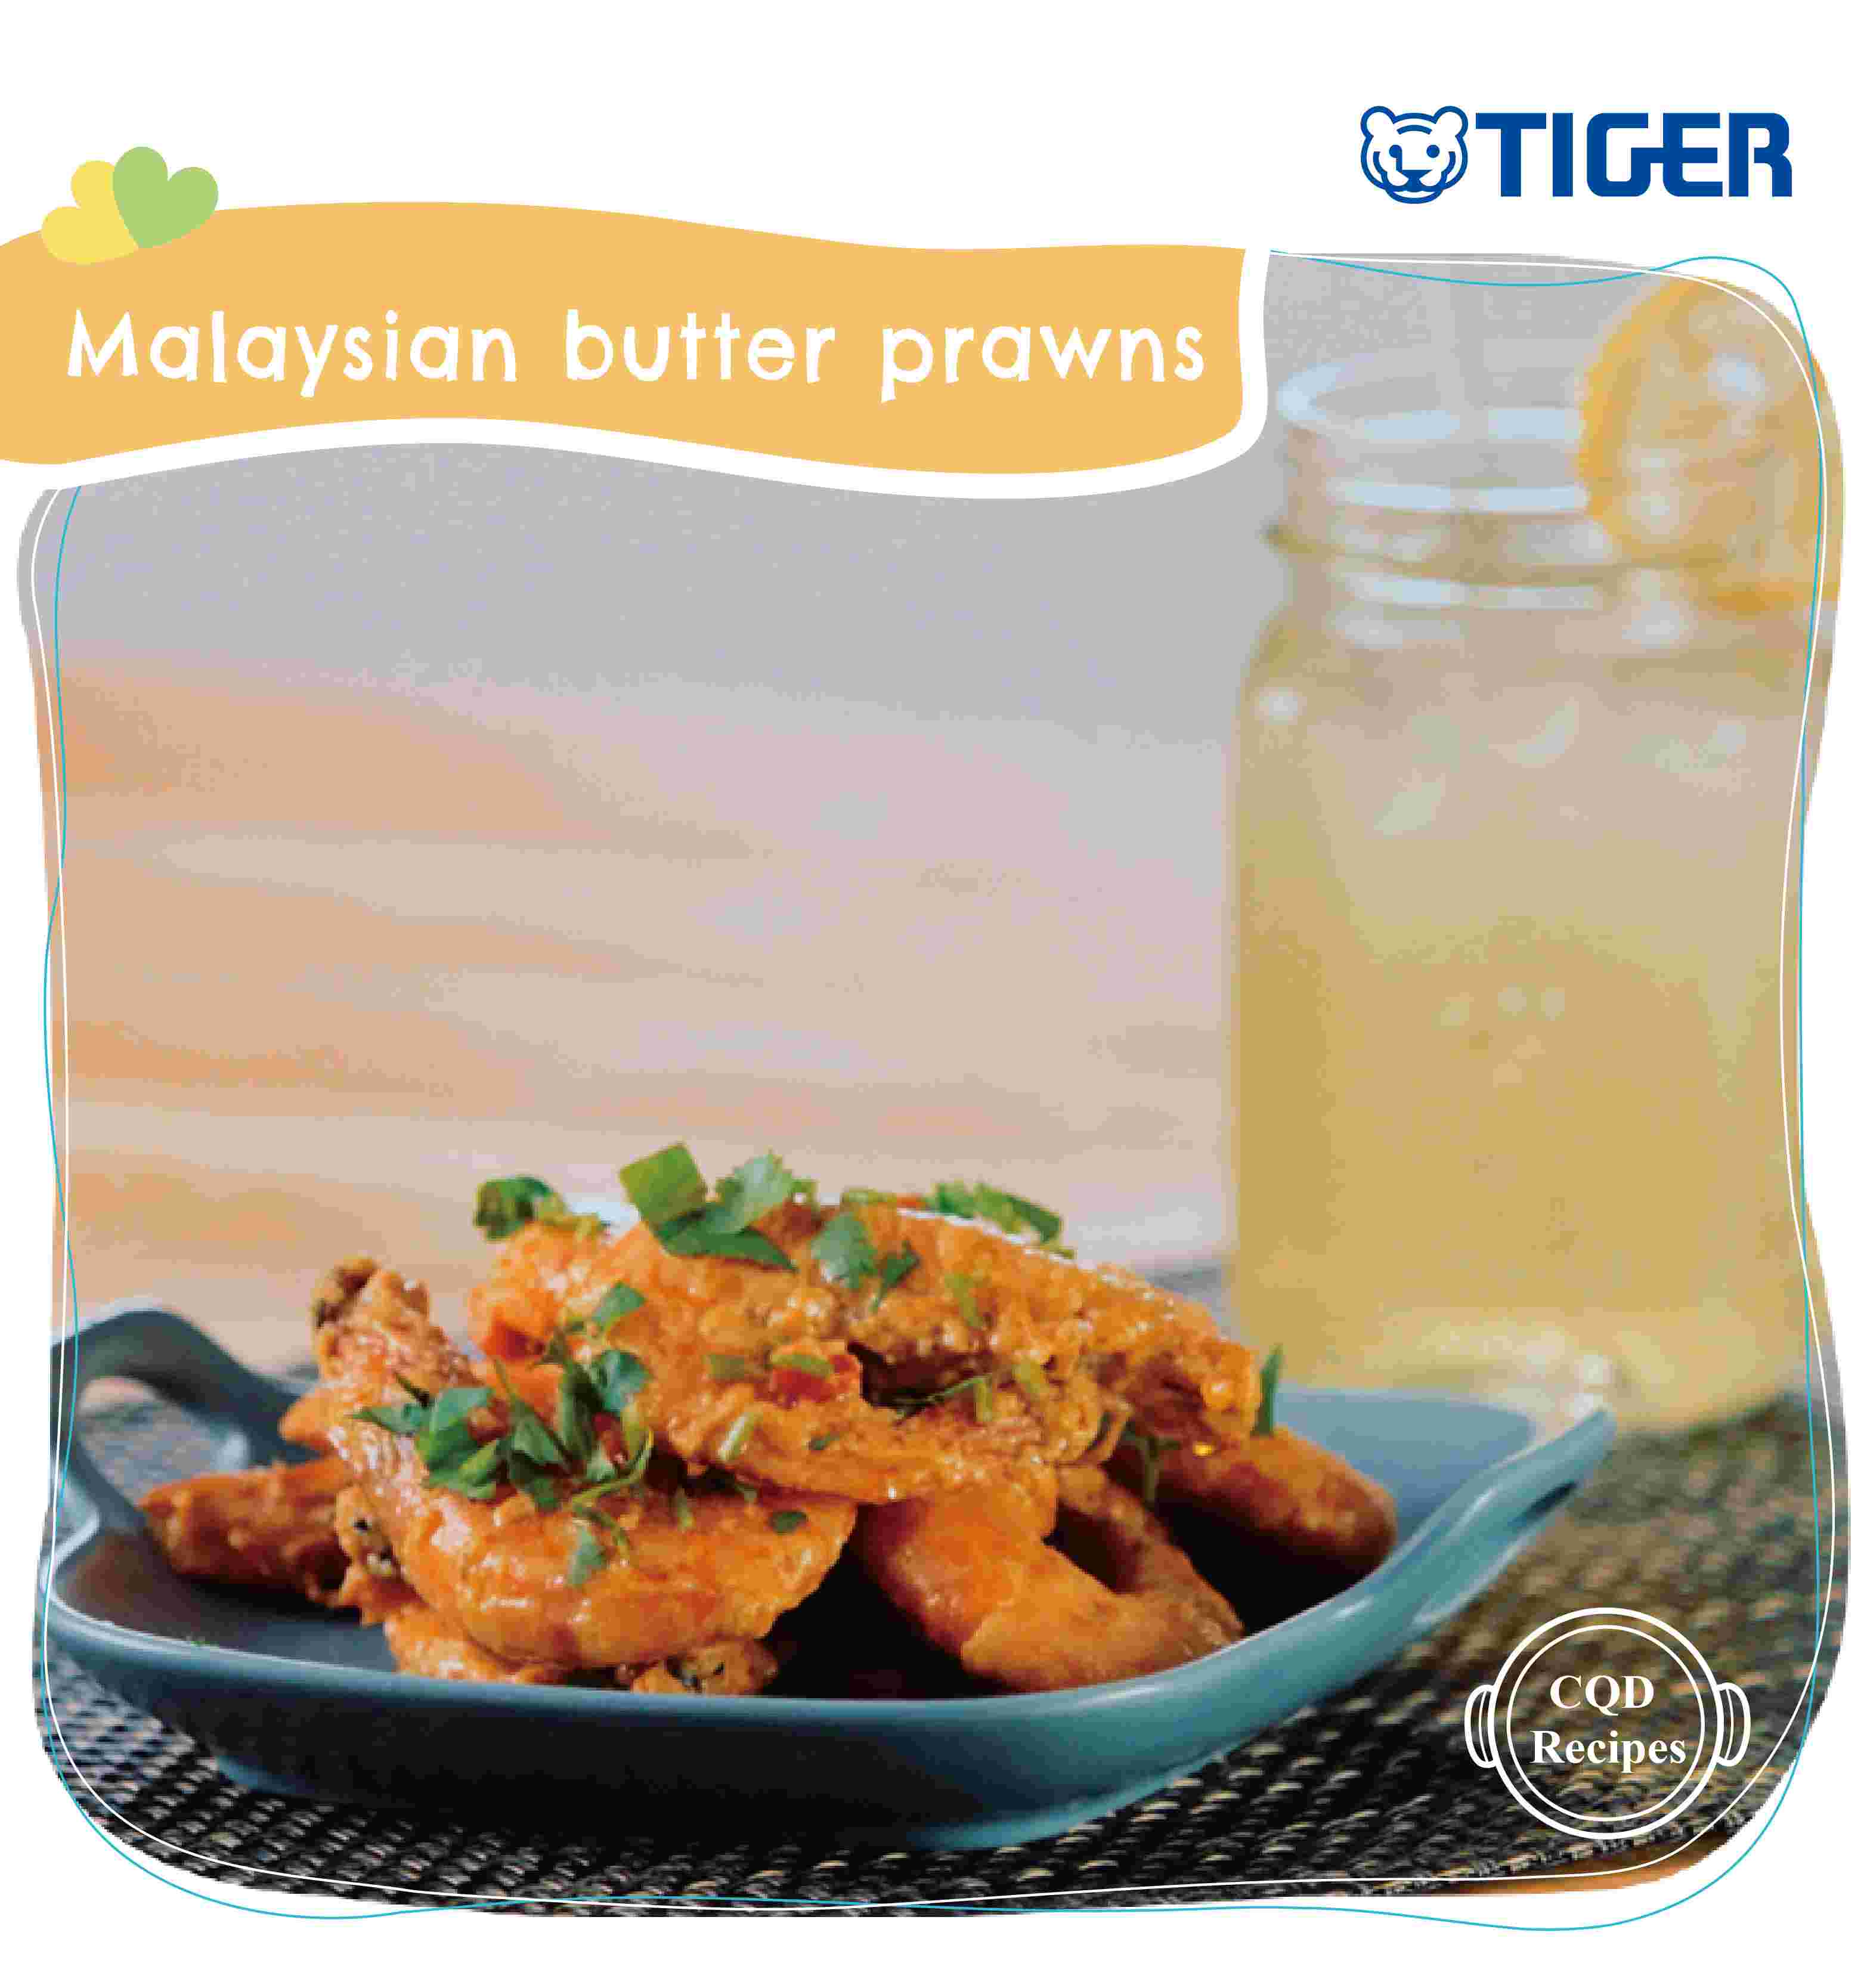 TIGER-recipe-malaysian-butter-prawns-en-1.jpg (226 KB)